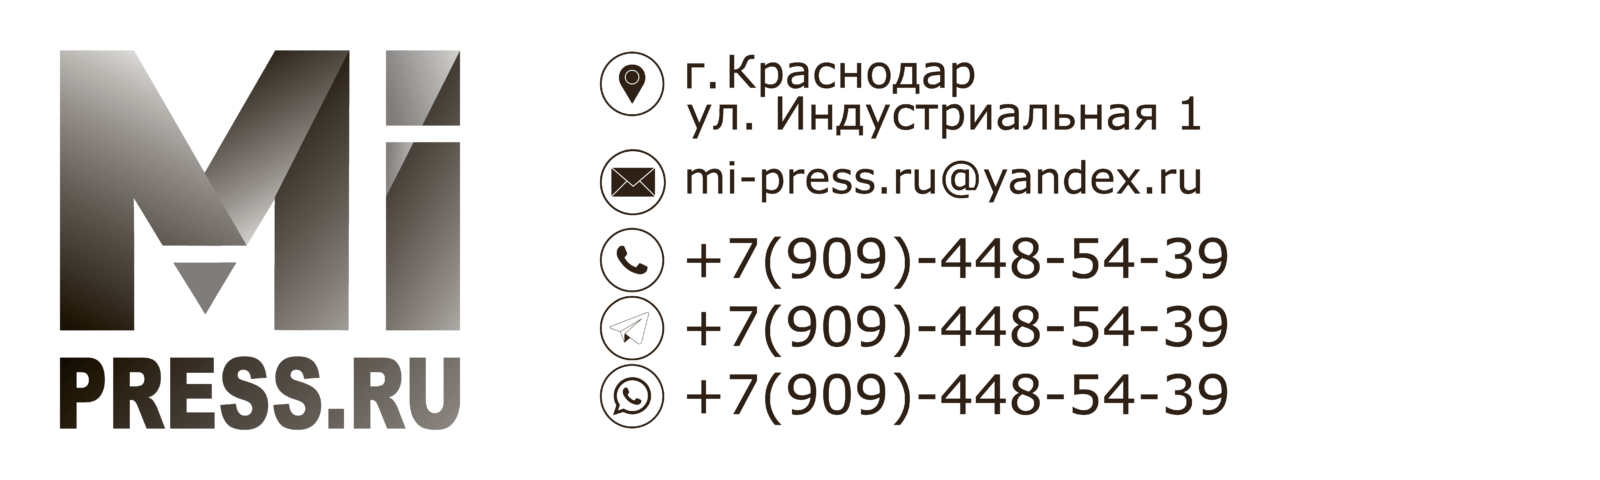 Типография Краснодар mi-press.ru лого+контакты лого+контакты10